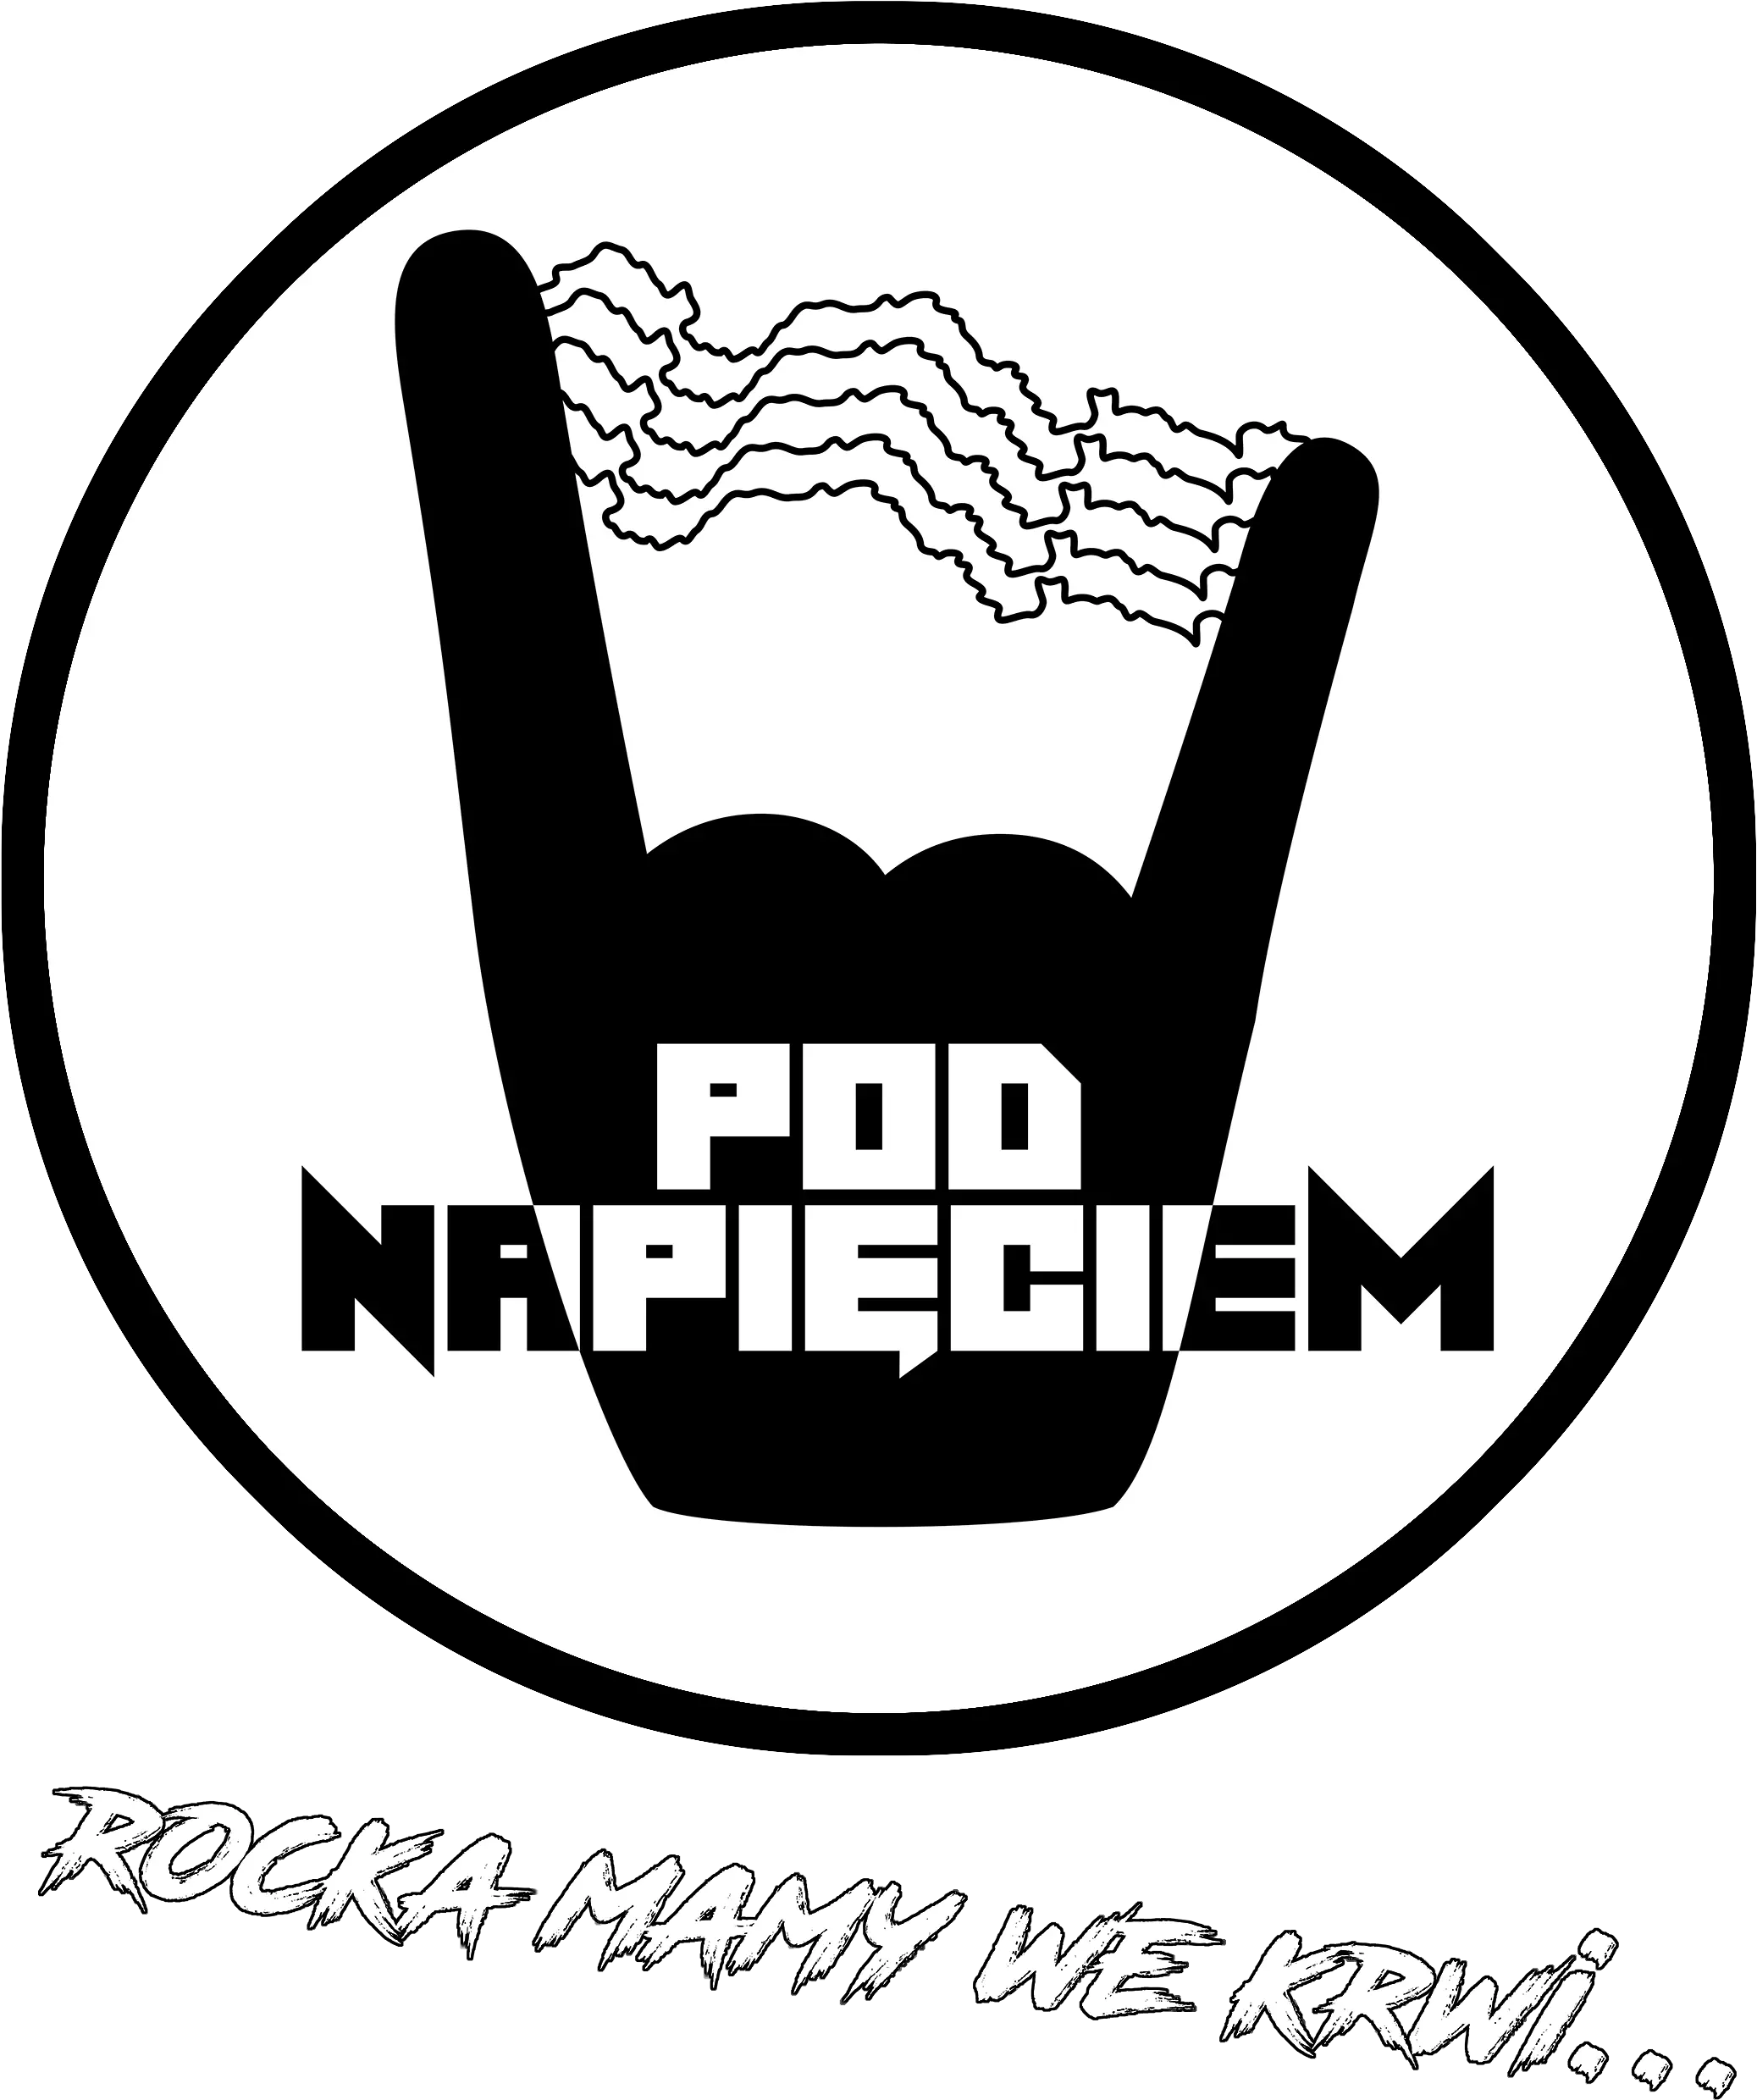 Filepod Napiciem Band Logopng Wikimedia Commons Illustration Band Png